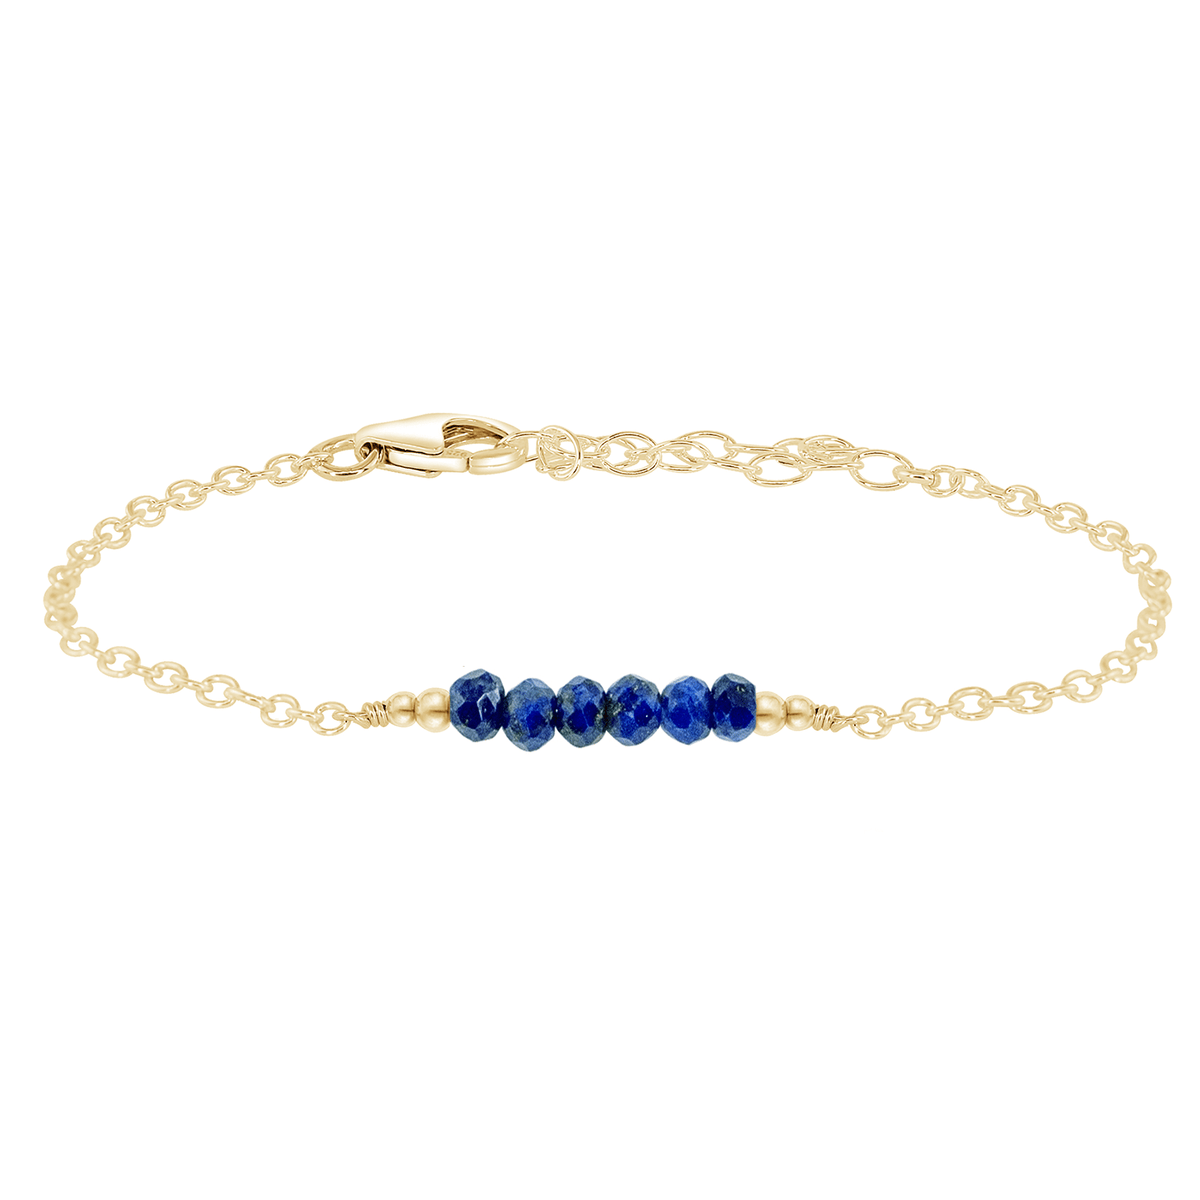 Faceted Bead Bar Bracelet - Lapis Lazuli - 14K Gold Fill - Luna Tide Handmade Jewellery